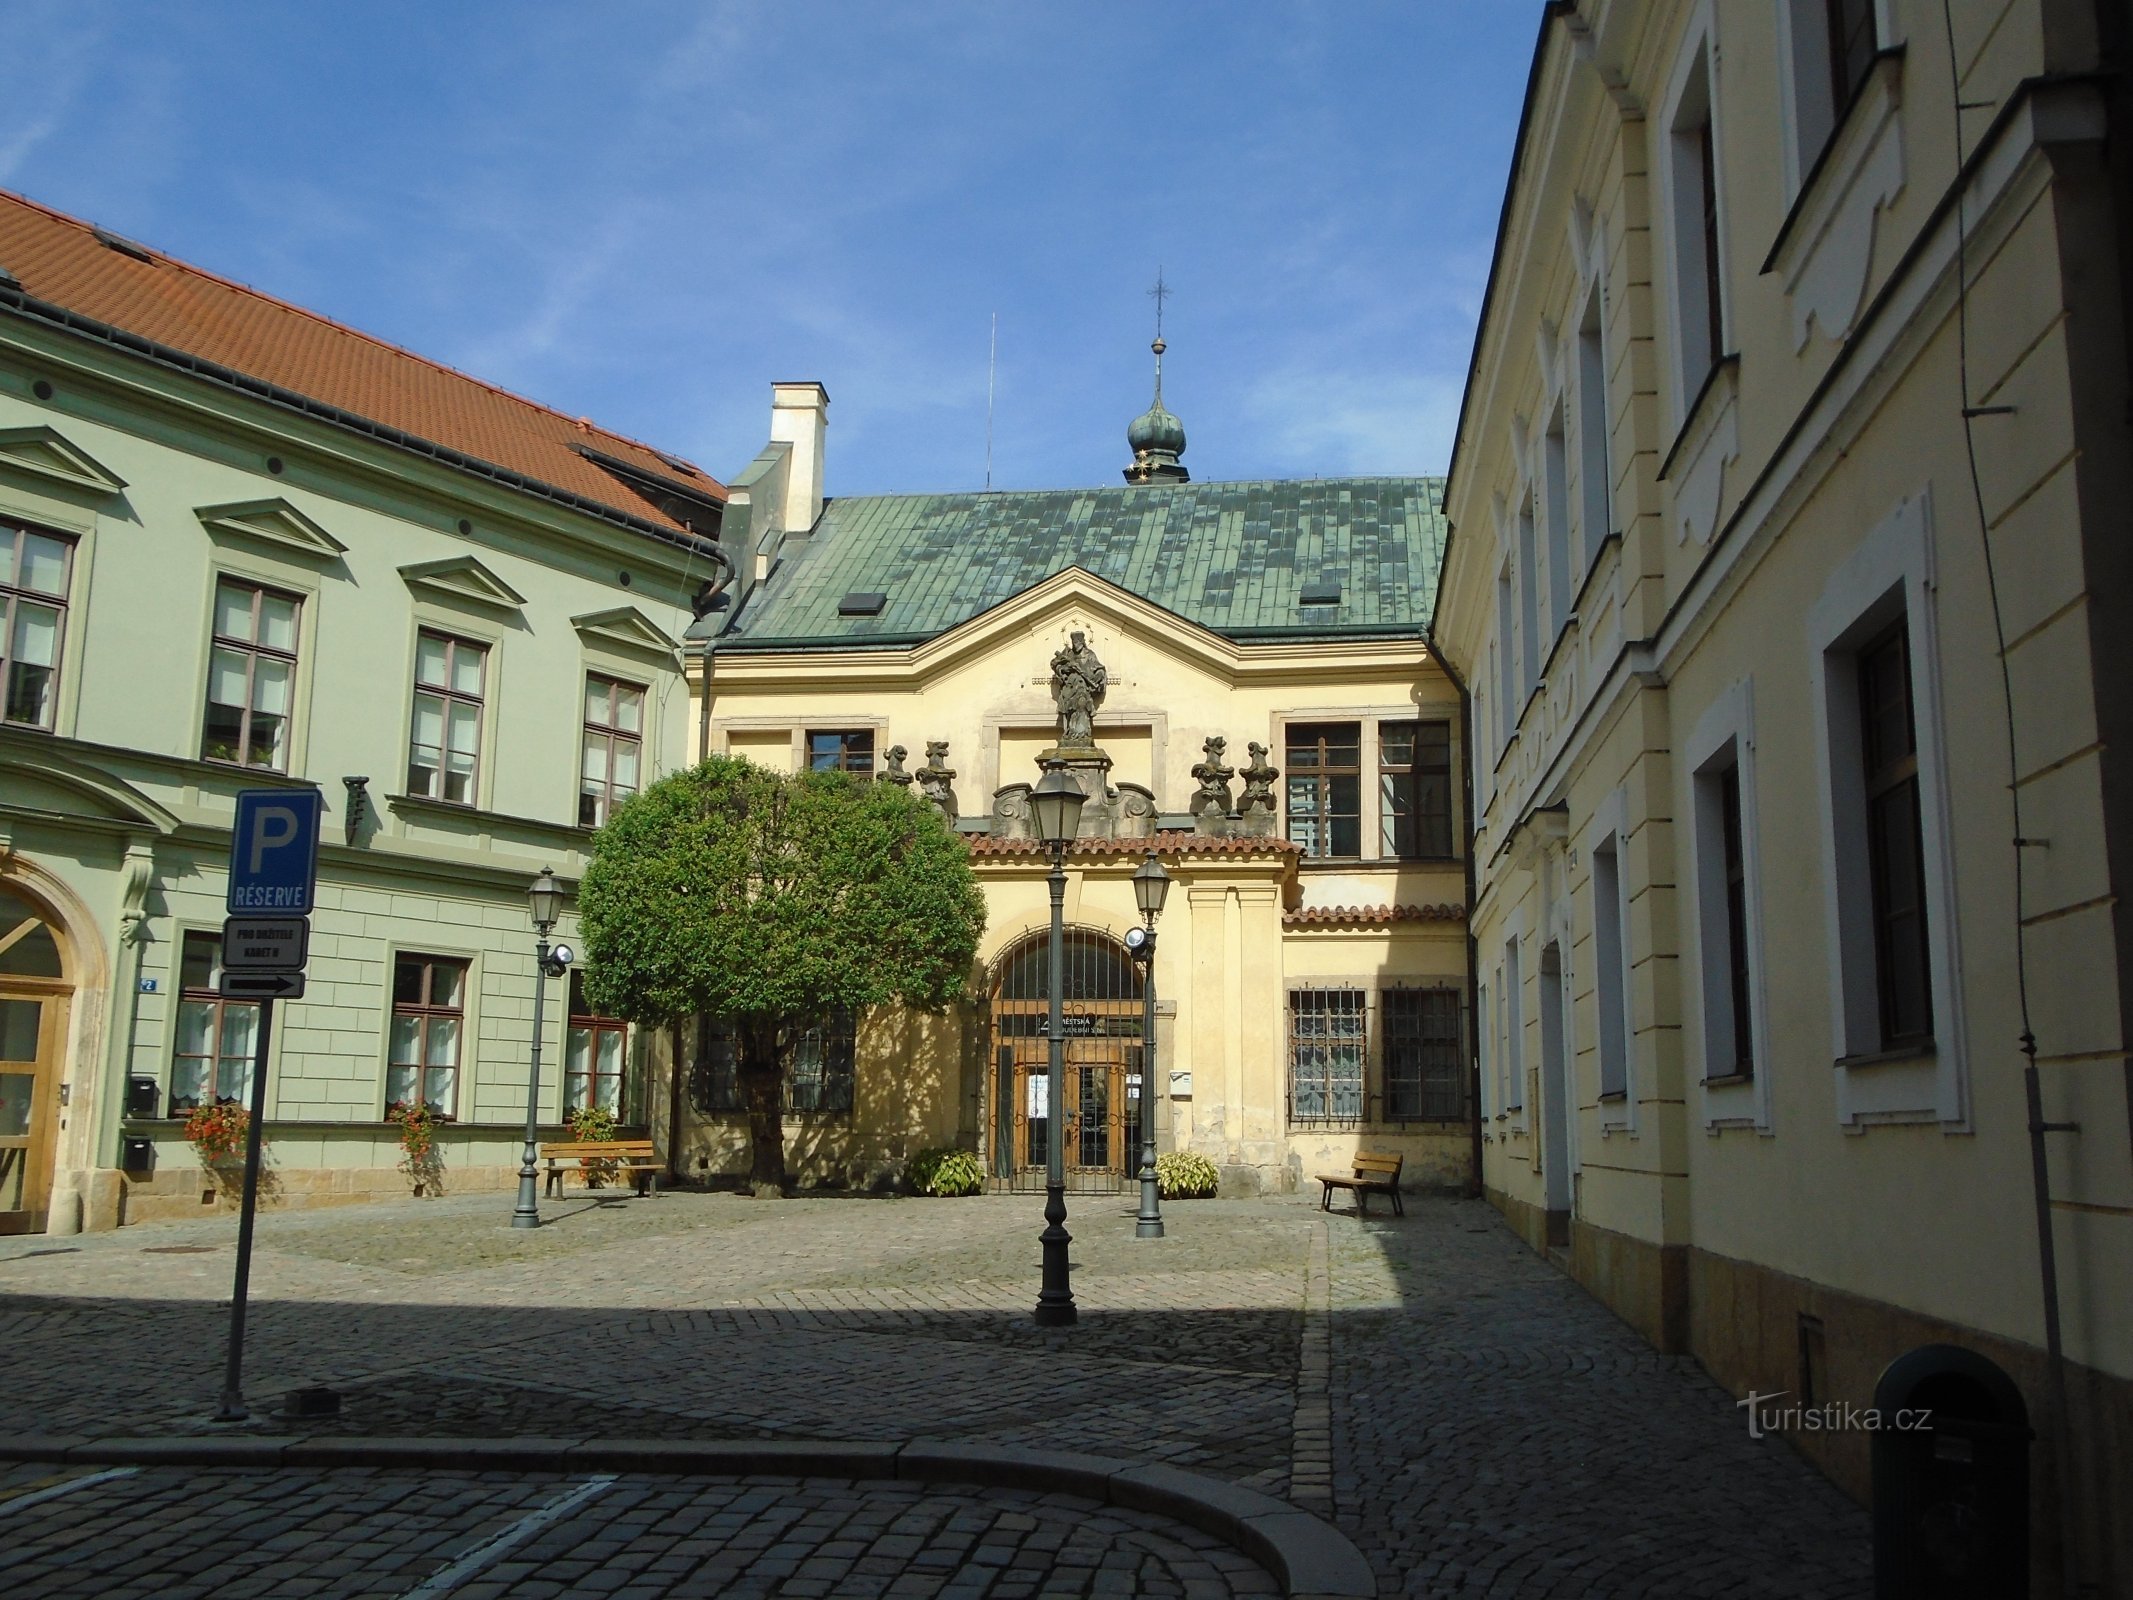 Linnassa nro 91 (Hradec Králové, 16.9.2018. lokakuuta XNUMX)